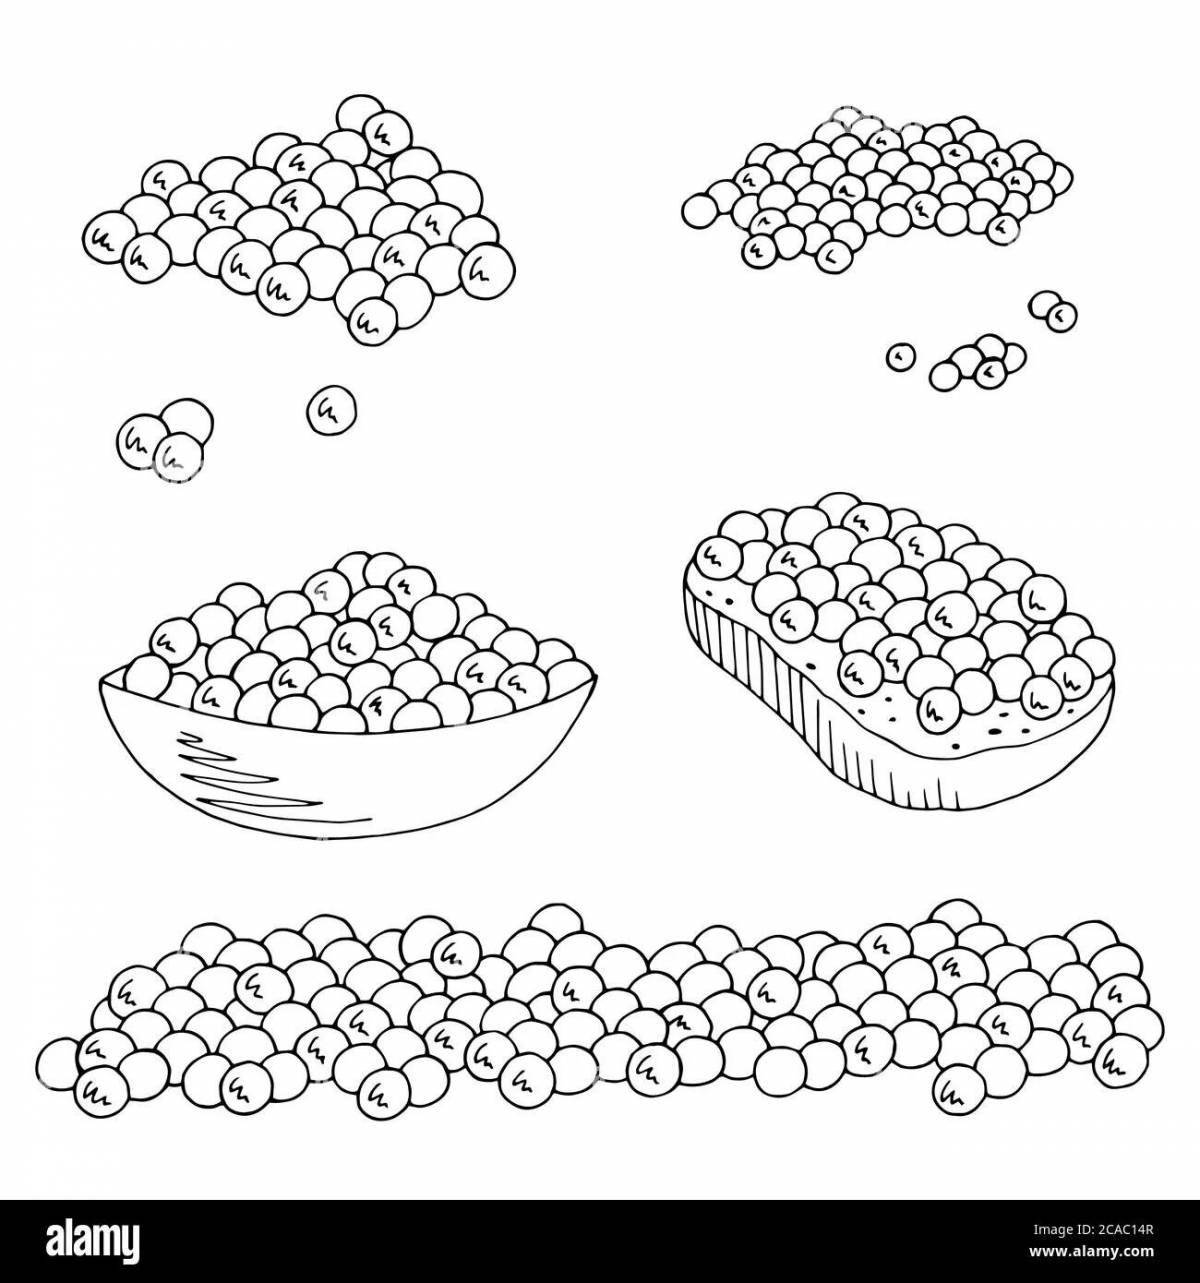 Delightful caviar coloring page